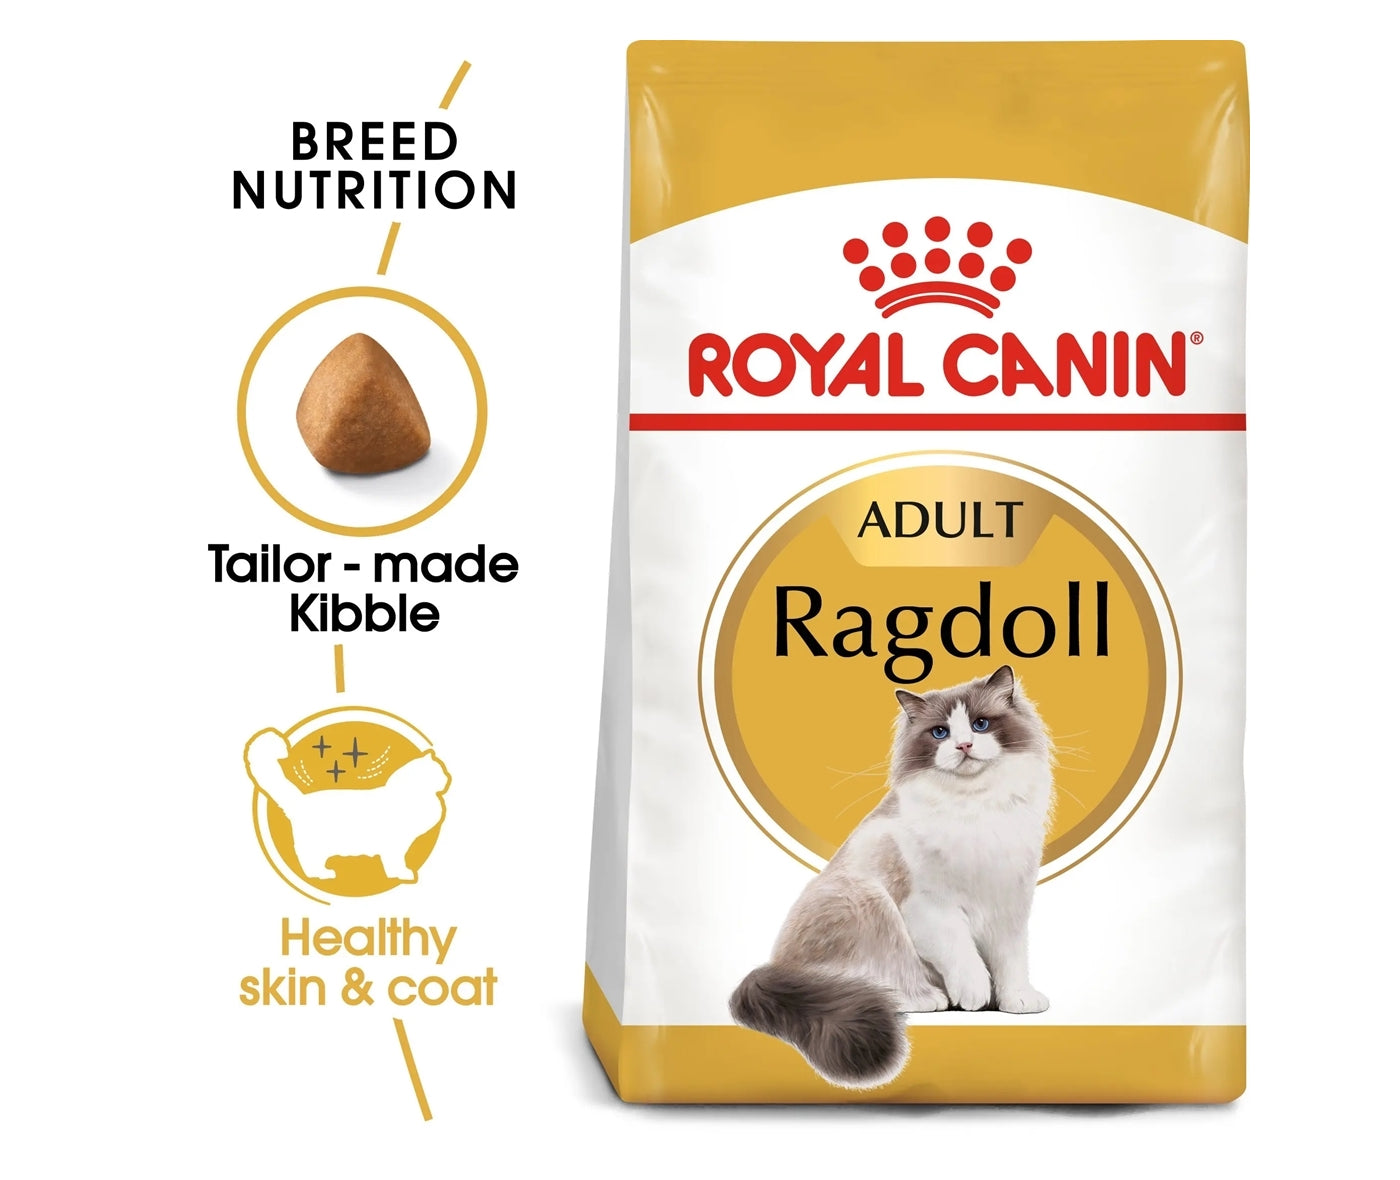 Royal Canin Ragdoll Adult - Dry Cat Food - Buy Online SPR Centre UK